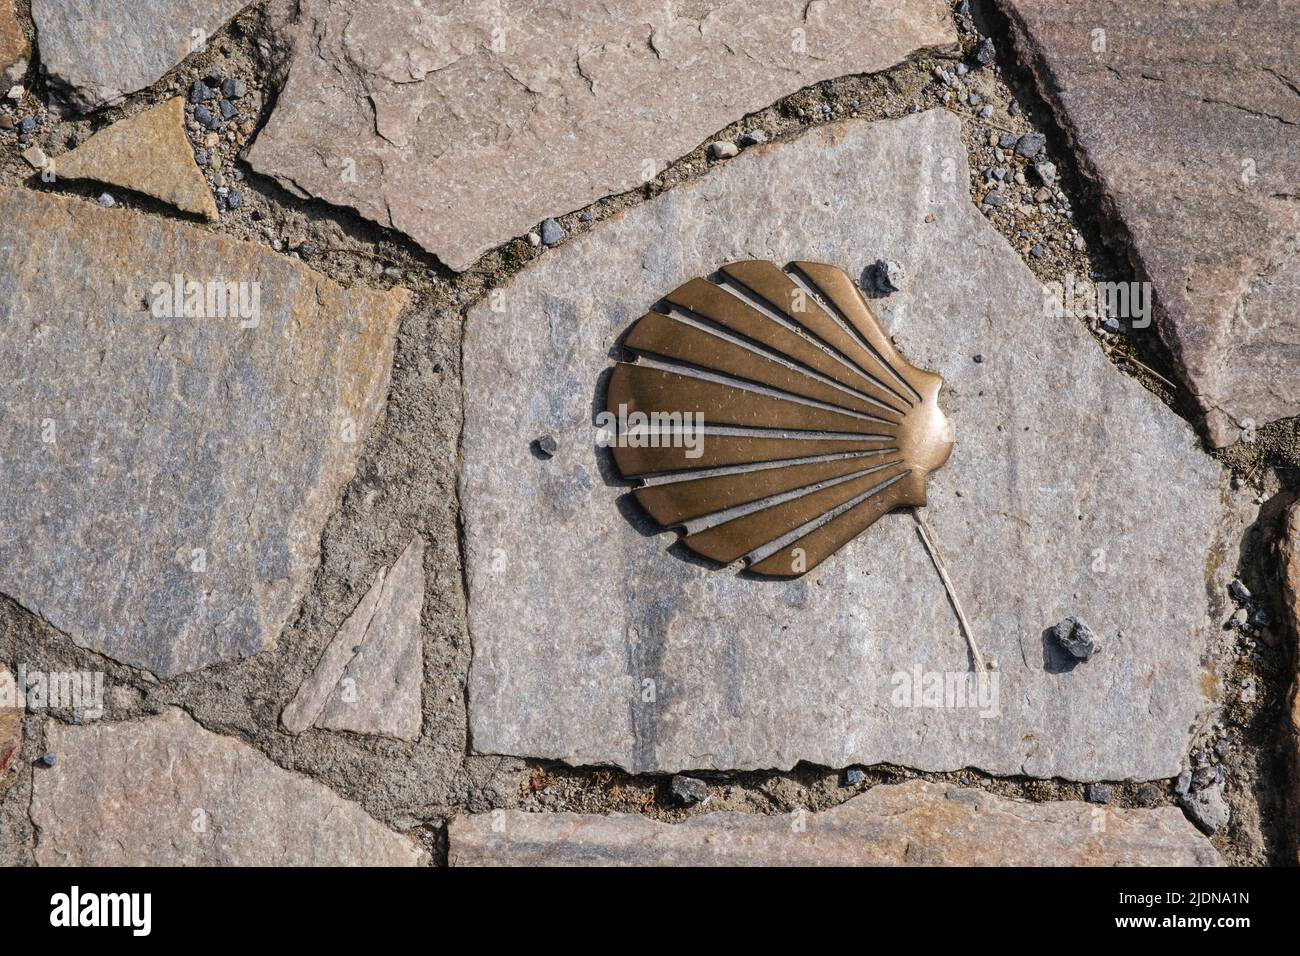 Spain, Cacabelos. Metal Scallop Shell Embedded on Sidewalk Stone Indicates the Direction of the Camino de Santiago.  Castilla y Leon Region. Stock Photo